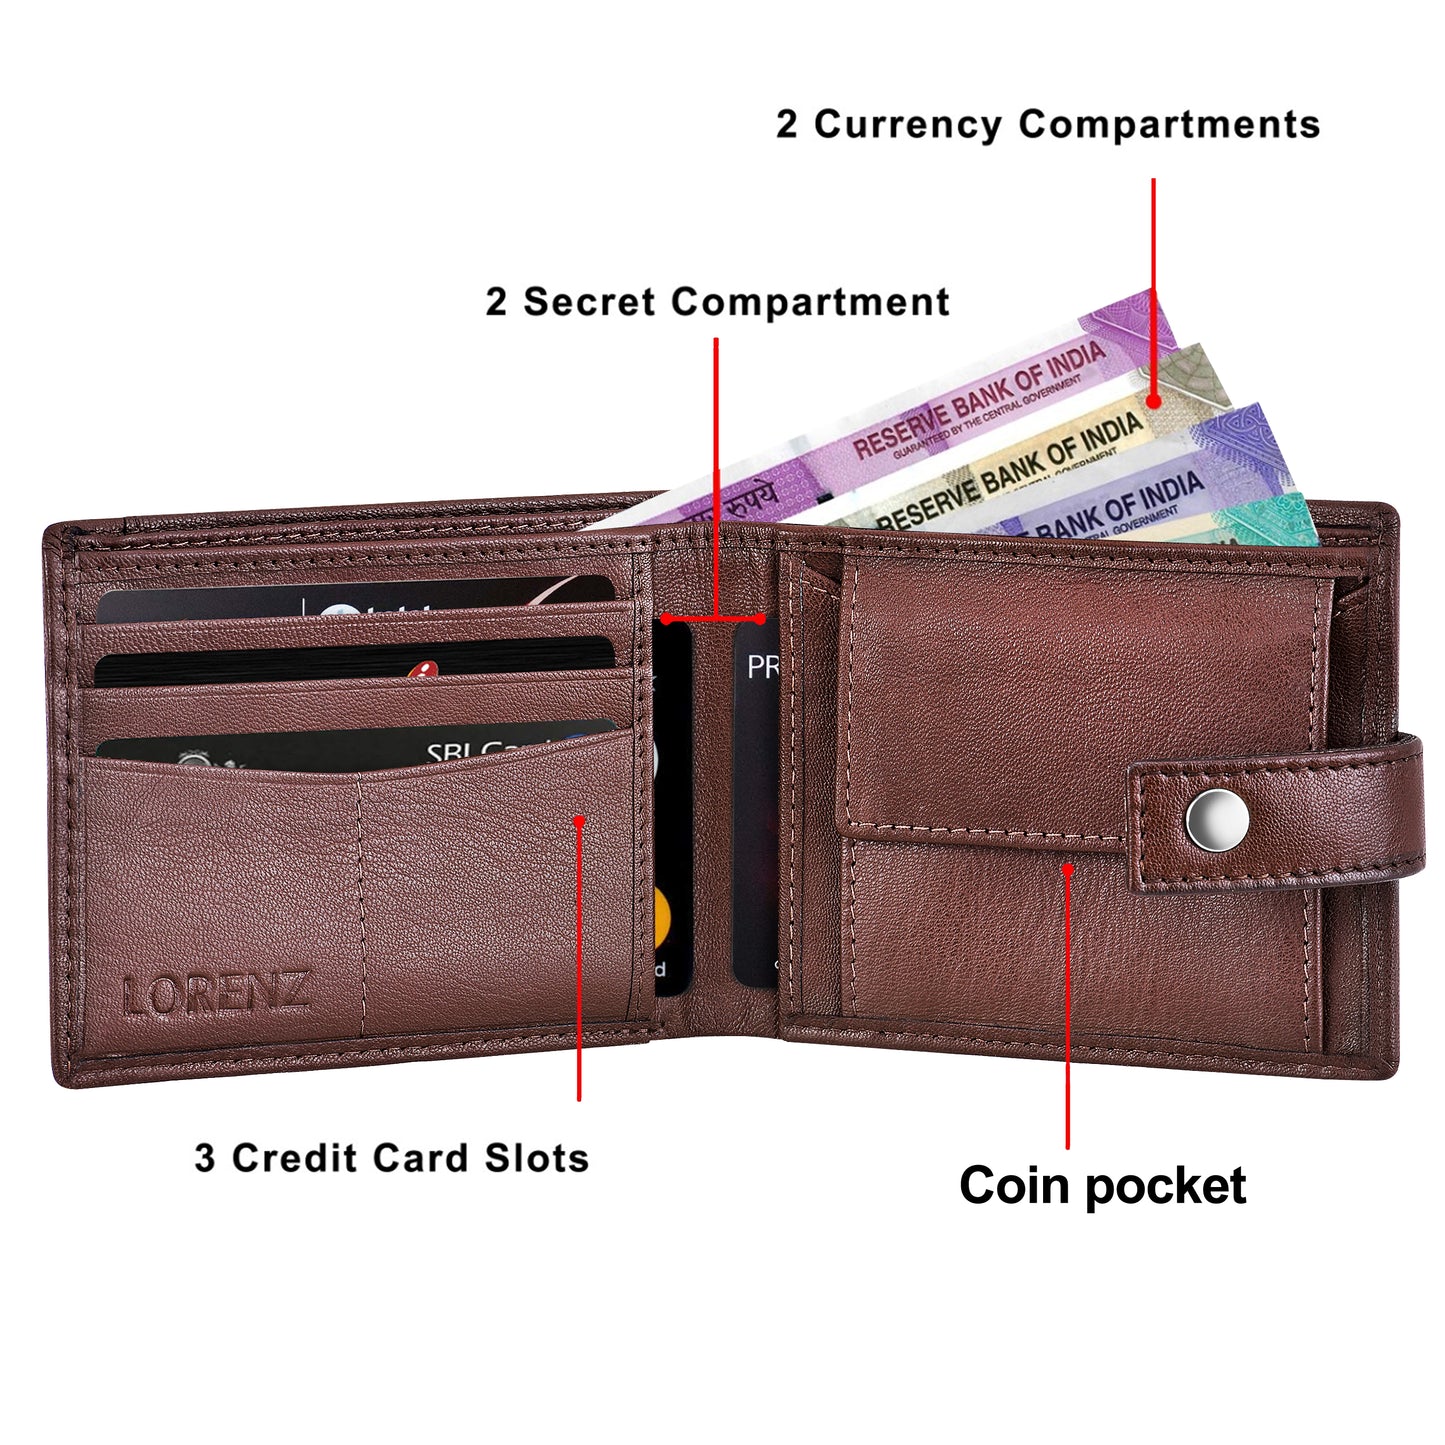 Lorenz Bi-Fold Dark Brown RFID Blocking Leather Wallet for Men with External Card Holder & Coin Pocket Feature